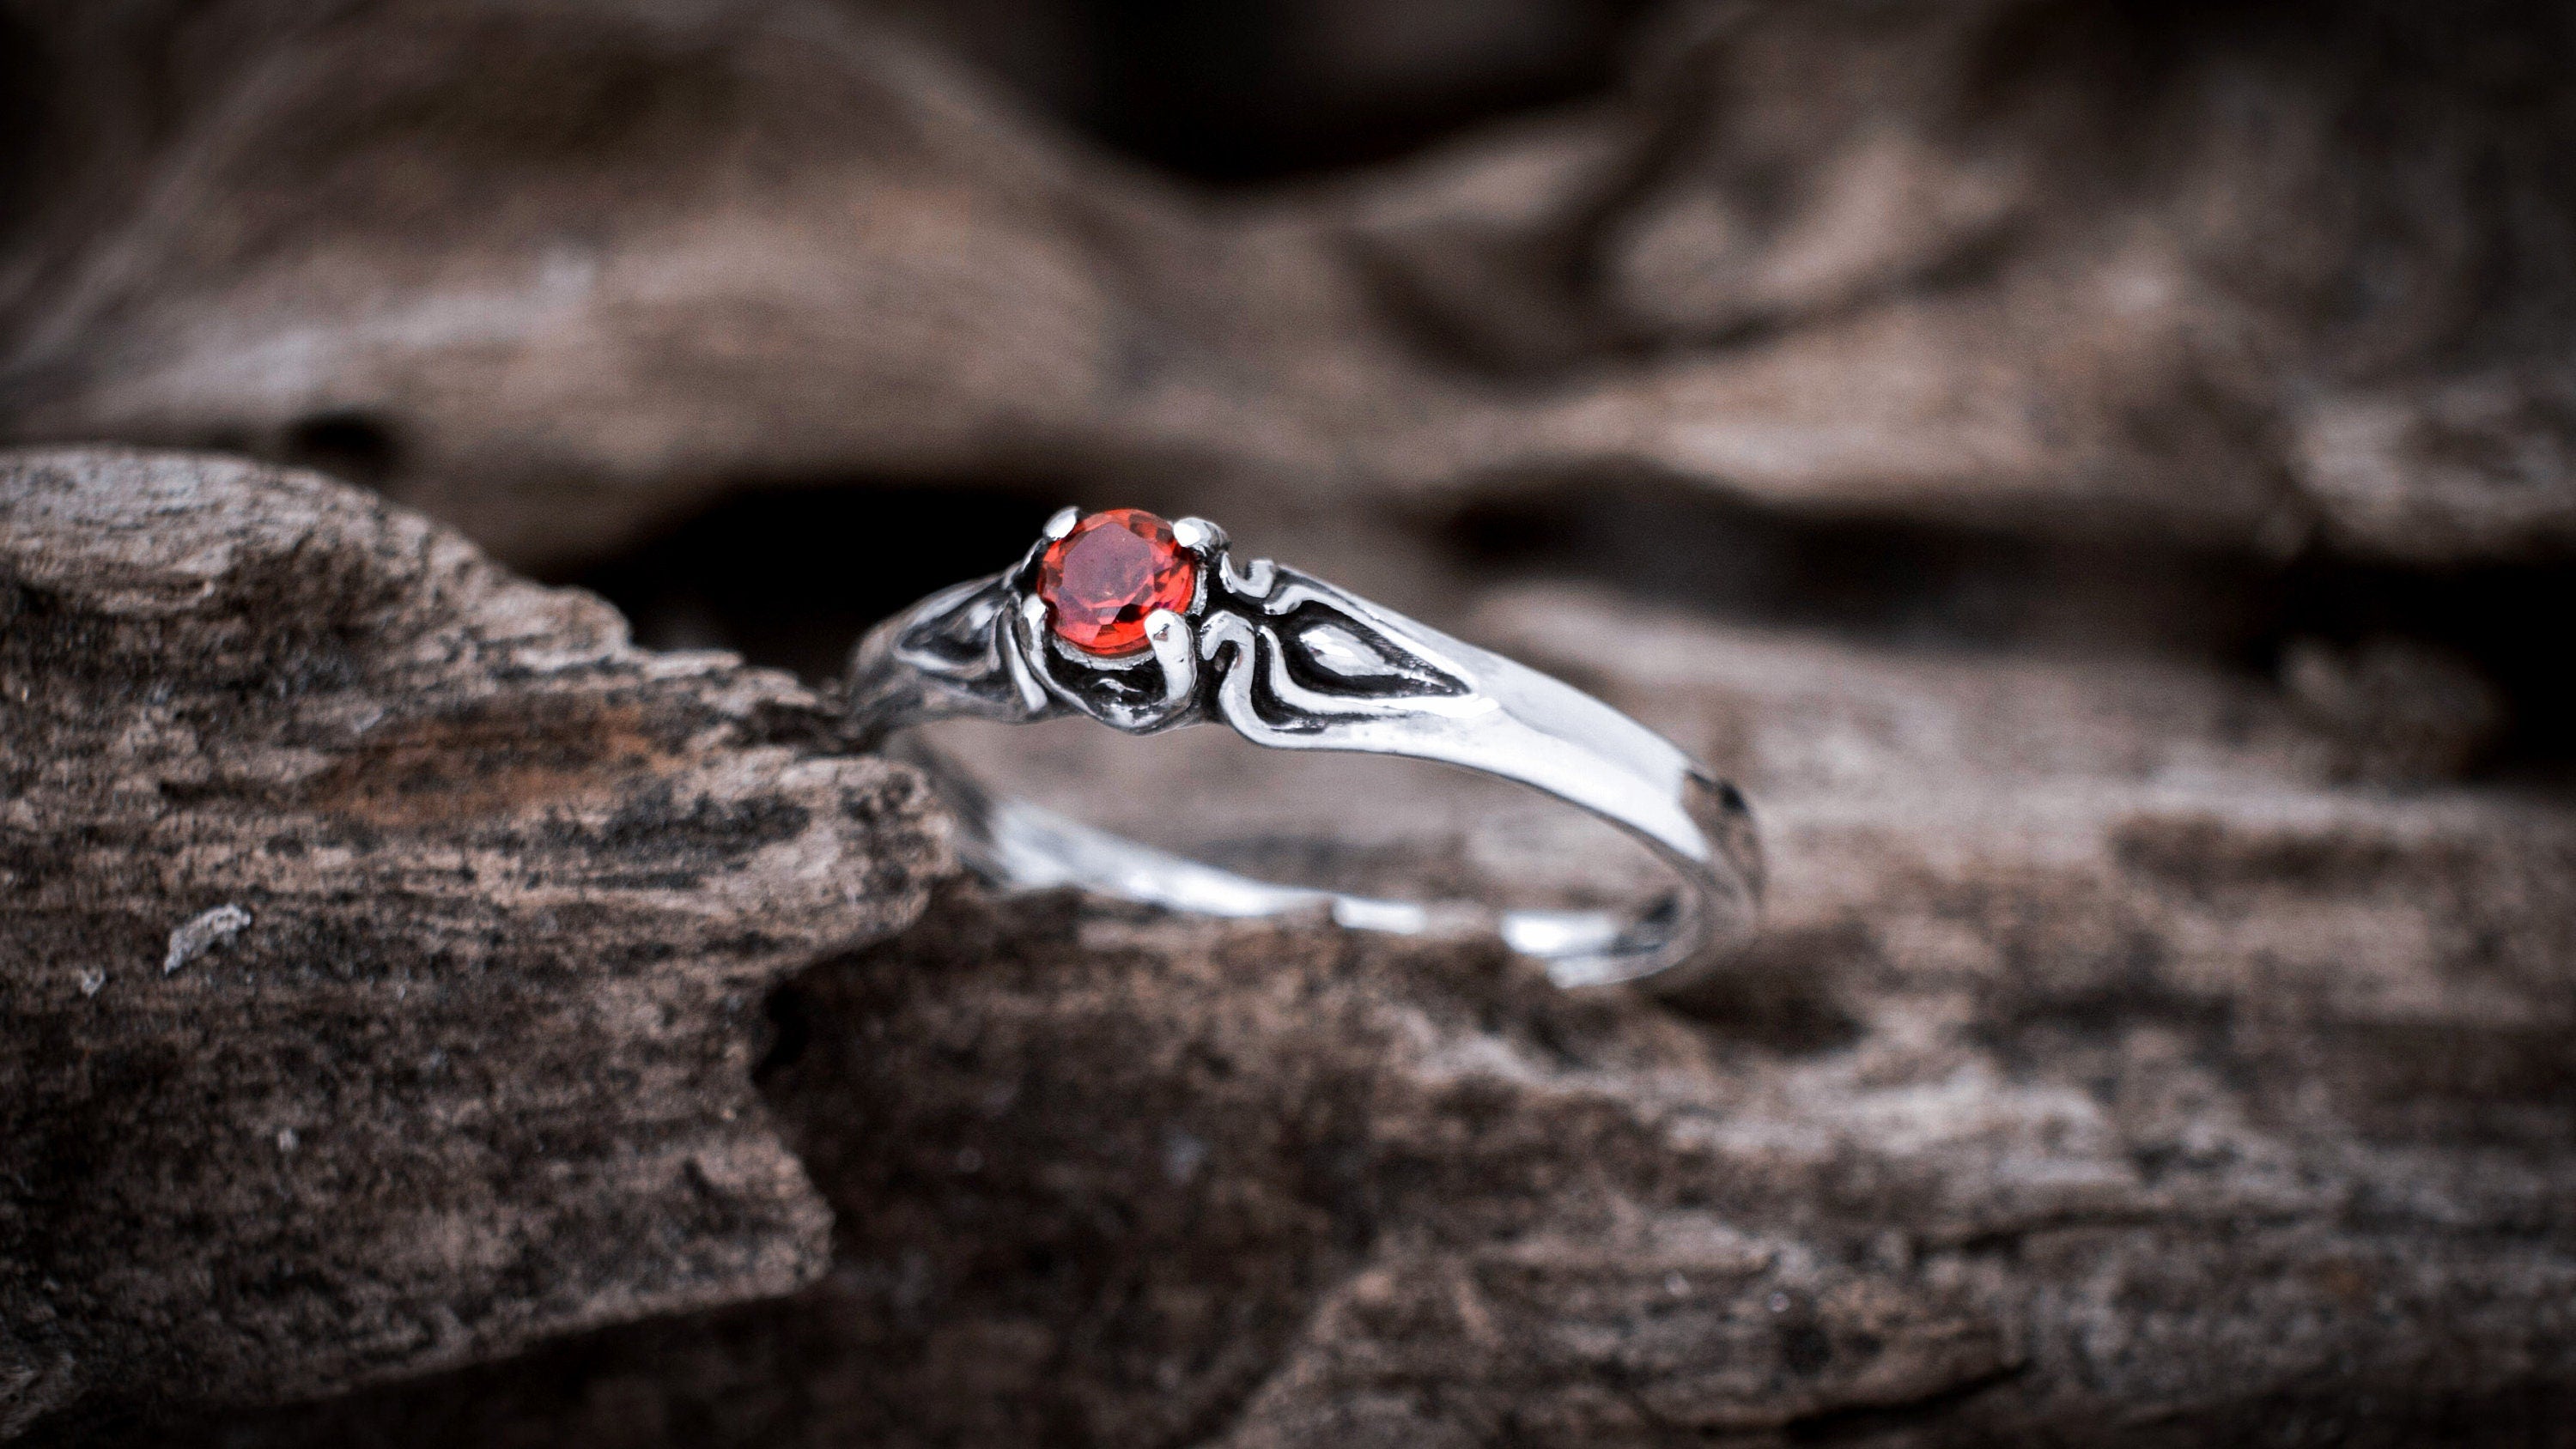 Nature Inspired Ring "Bud"